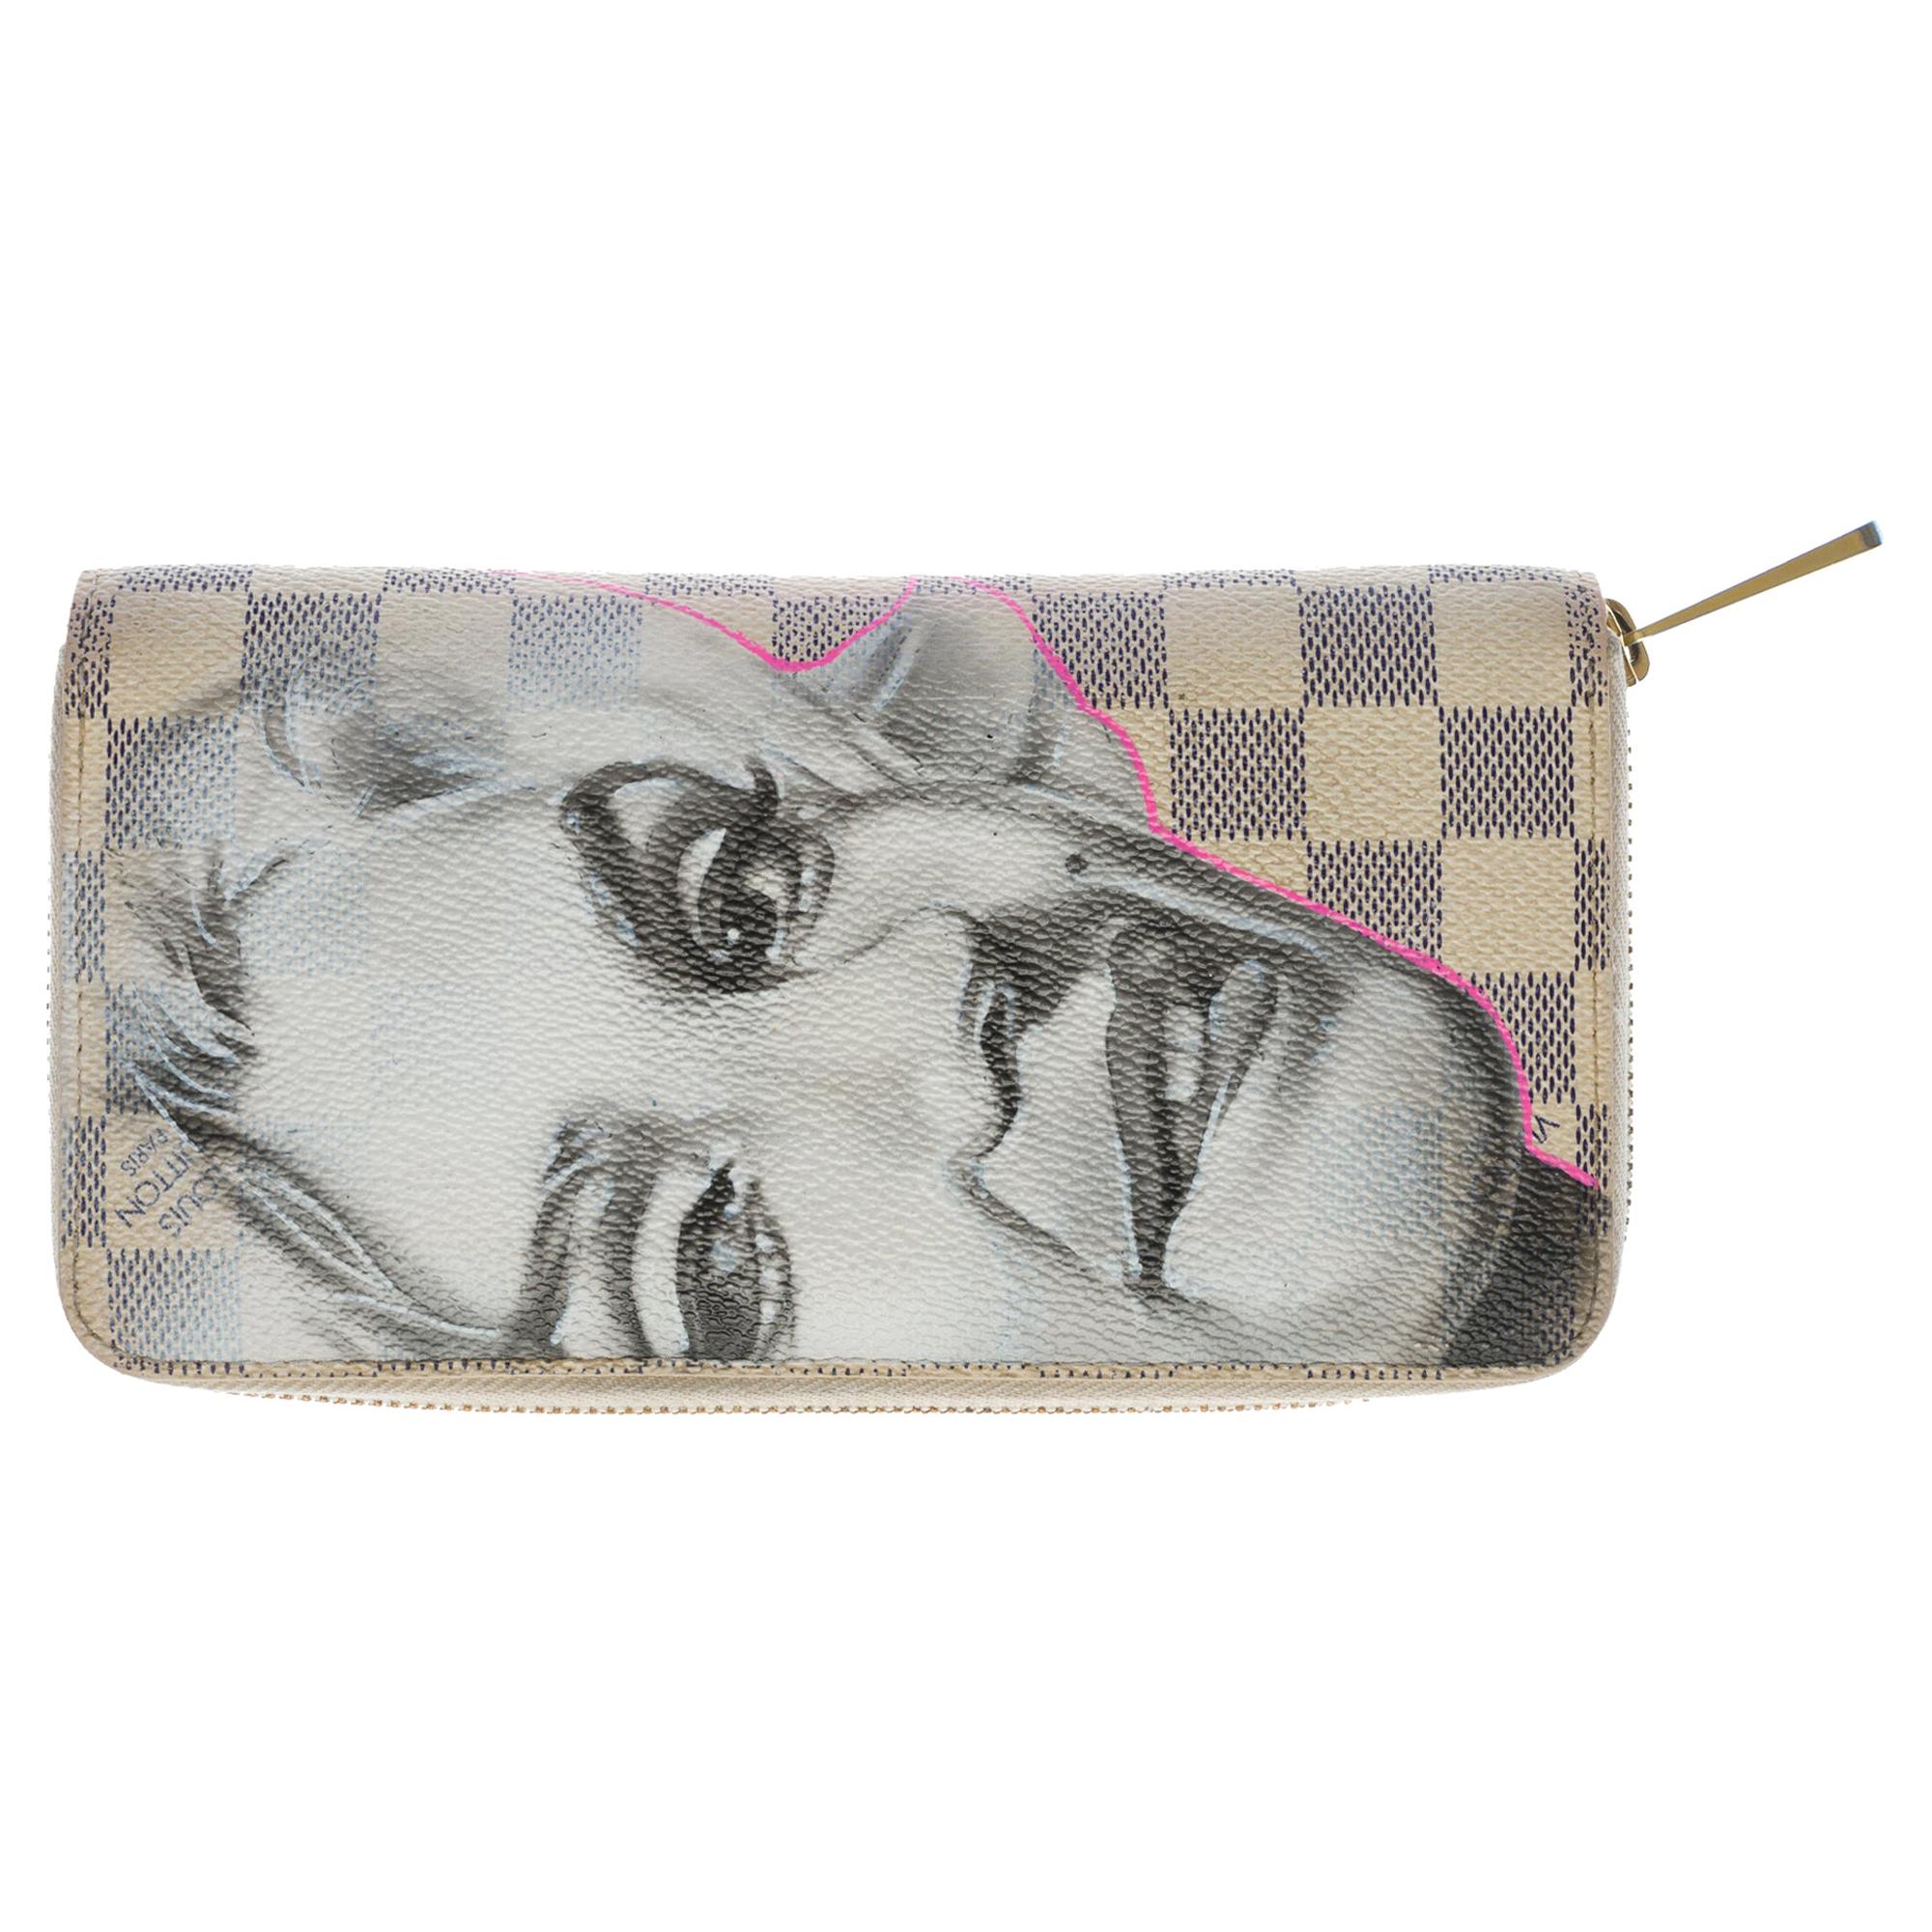 Customized "Marilyn Monroe" Louis Vuitton Zippy wallet in damier azur canvas